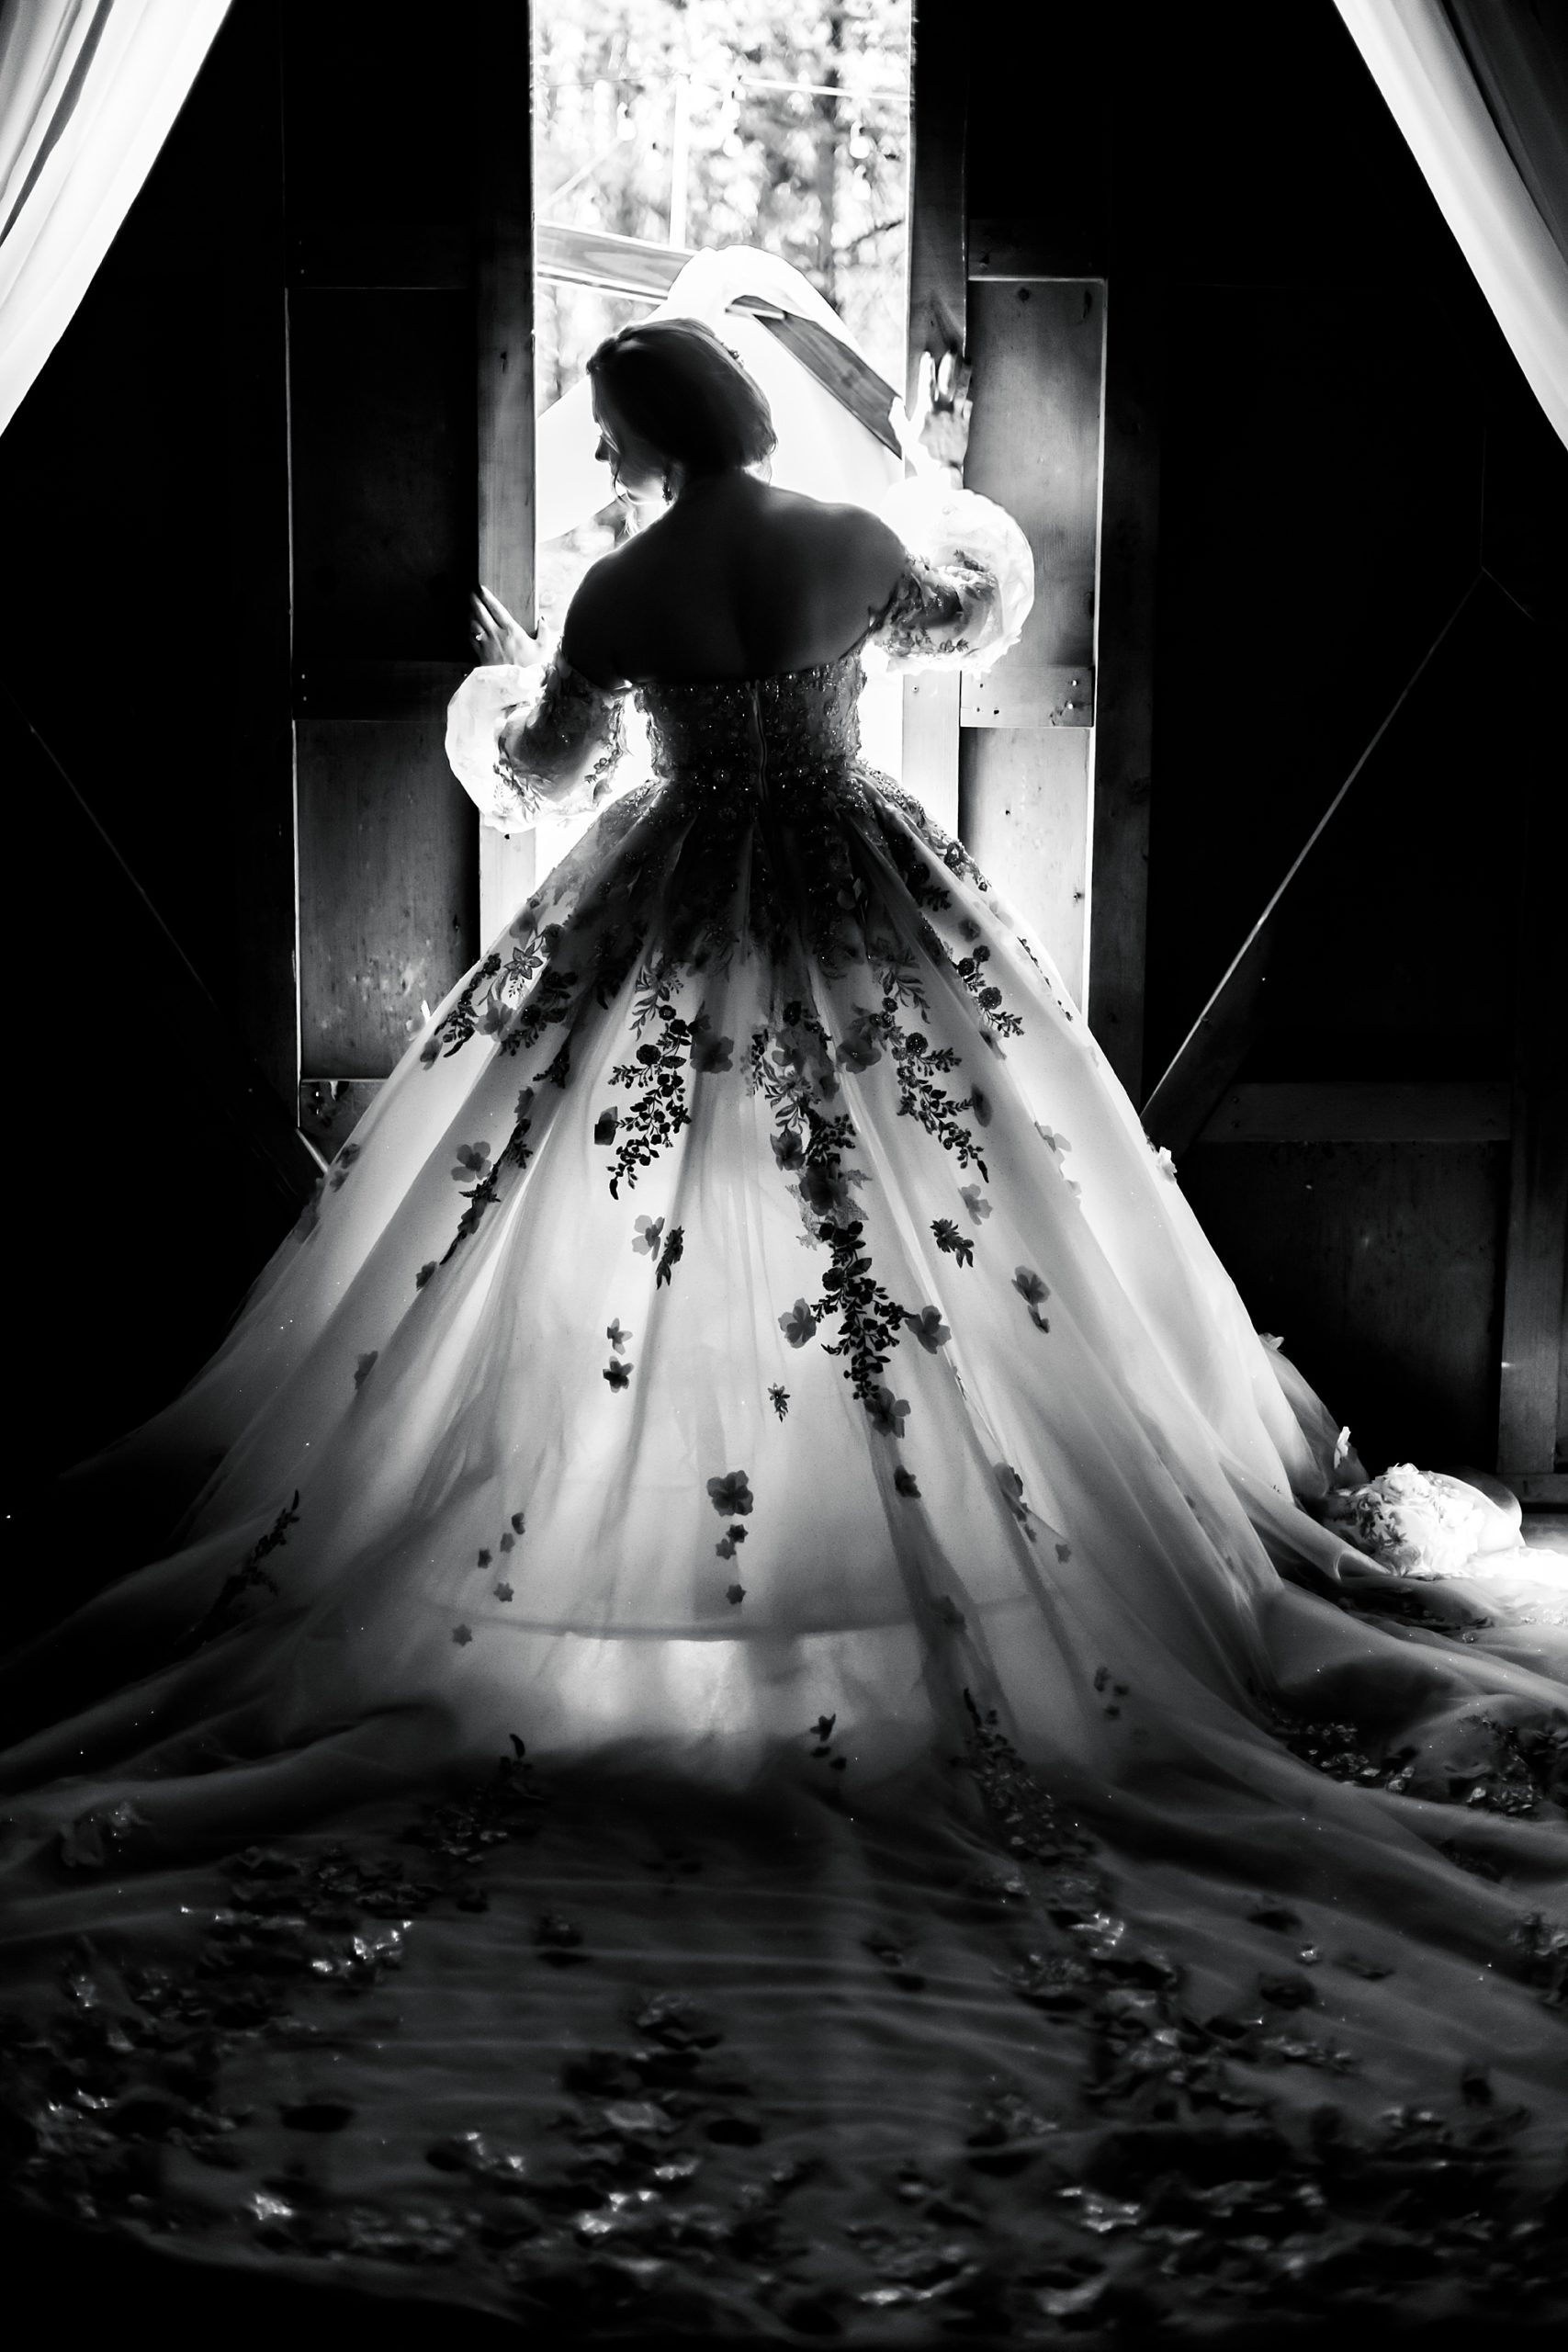 black and white portrait of ballgown wedding dress